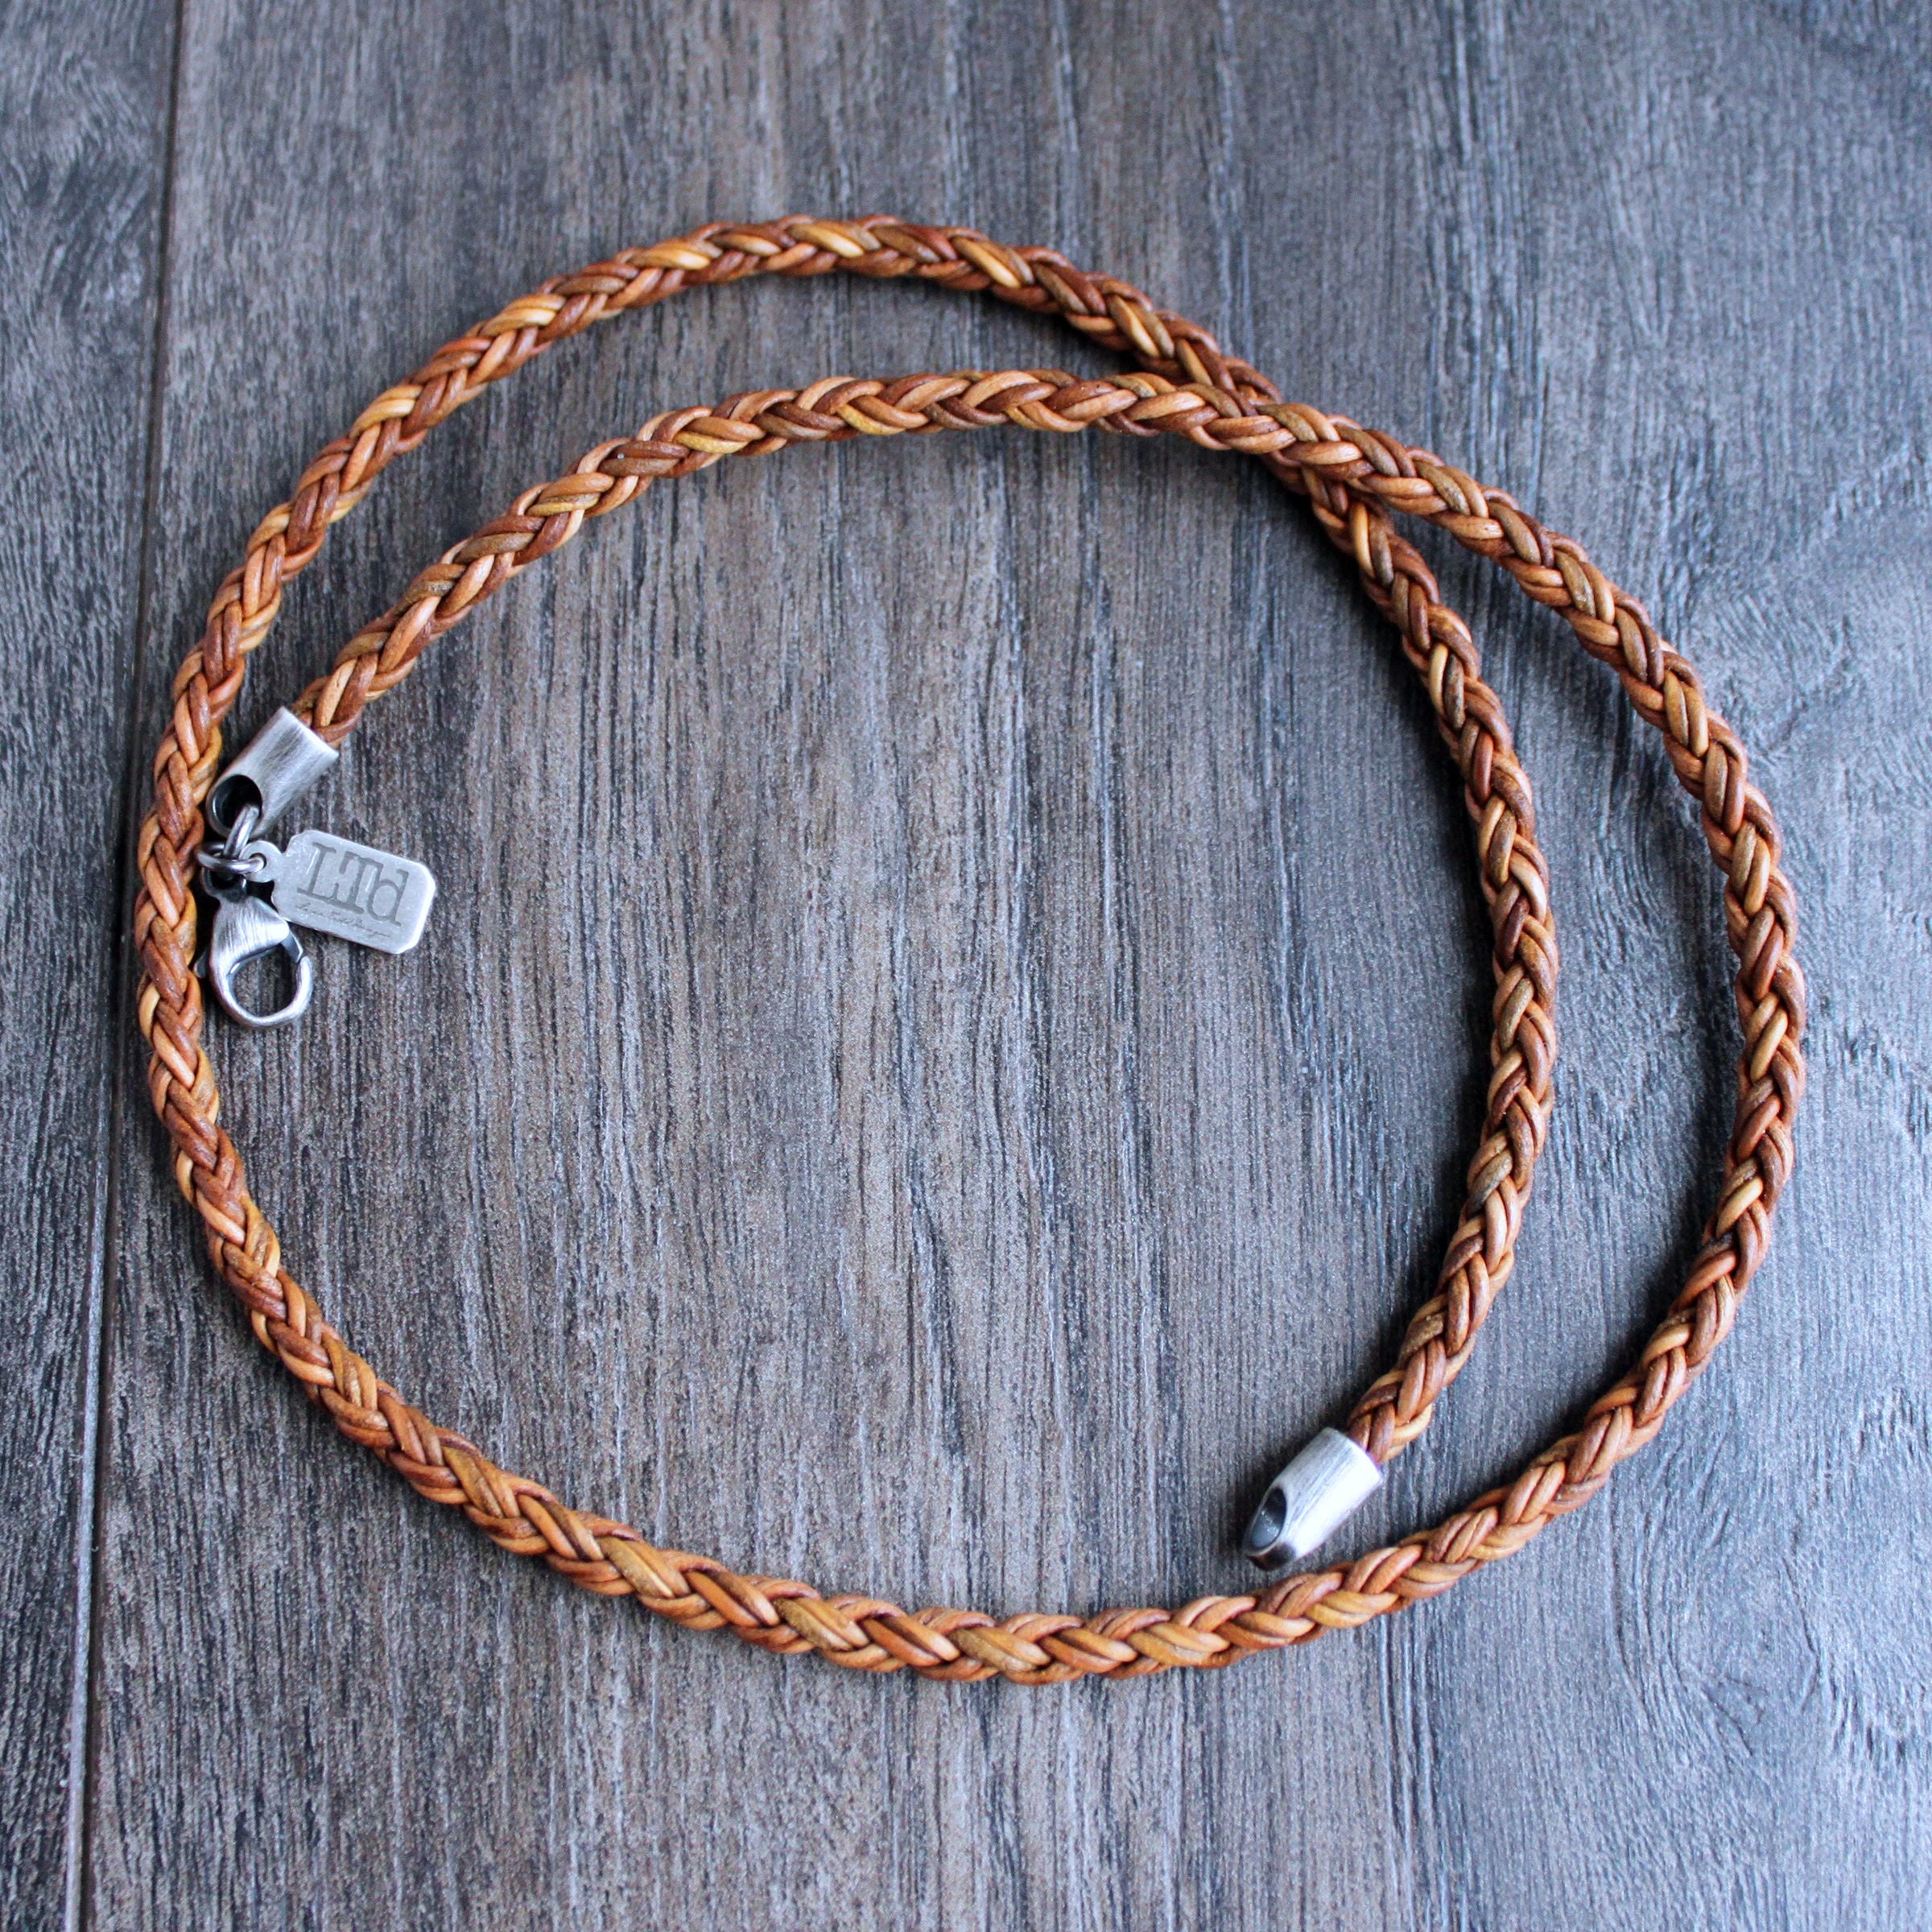 Braid Leather Bracelet, Leather Braided Rope Bracelet